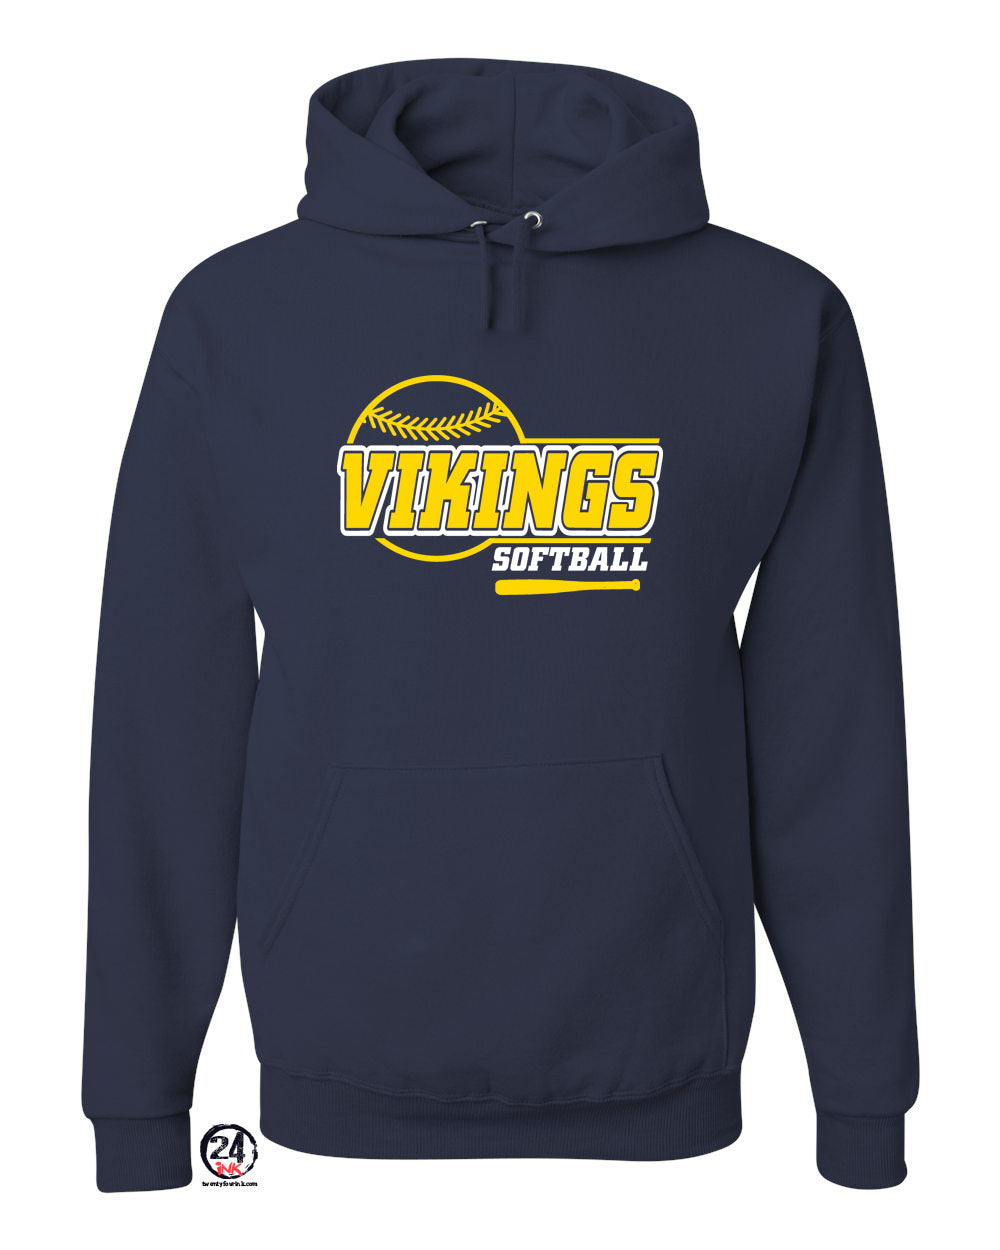 Vernon Vikings Softball Hooded Sweatshirt